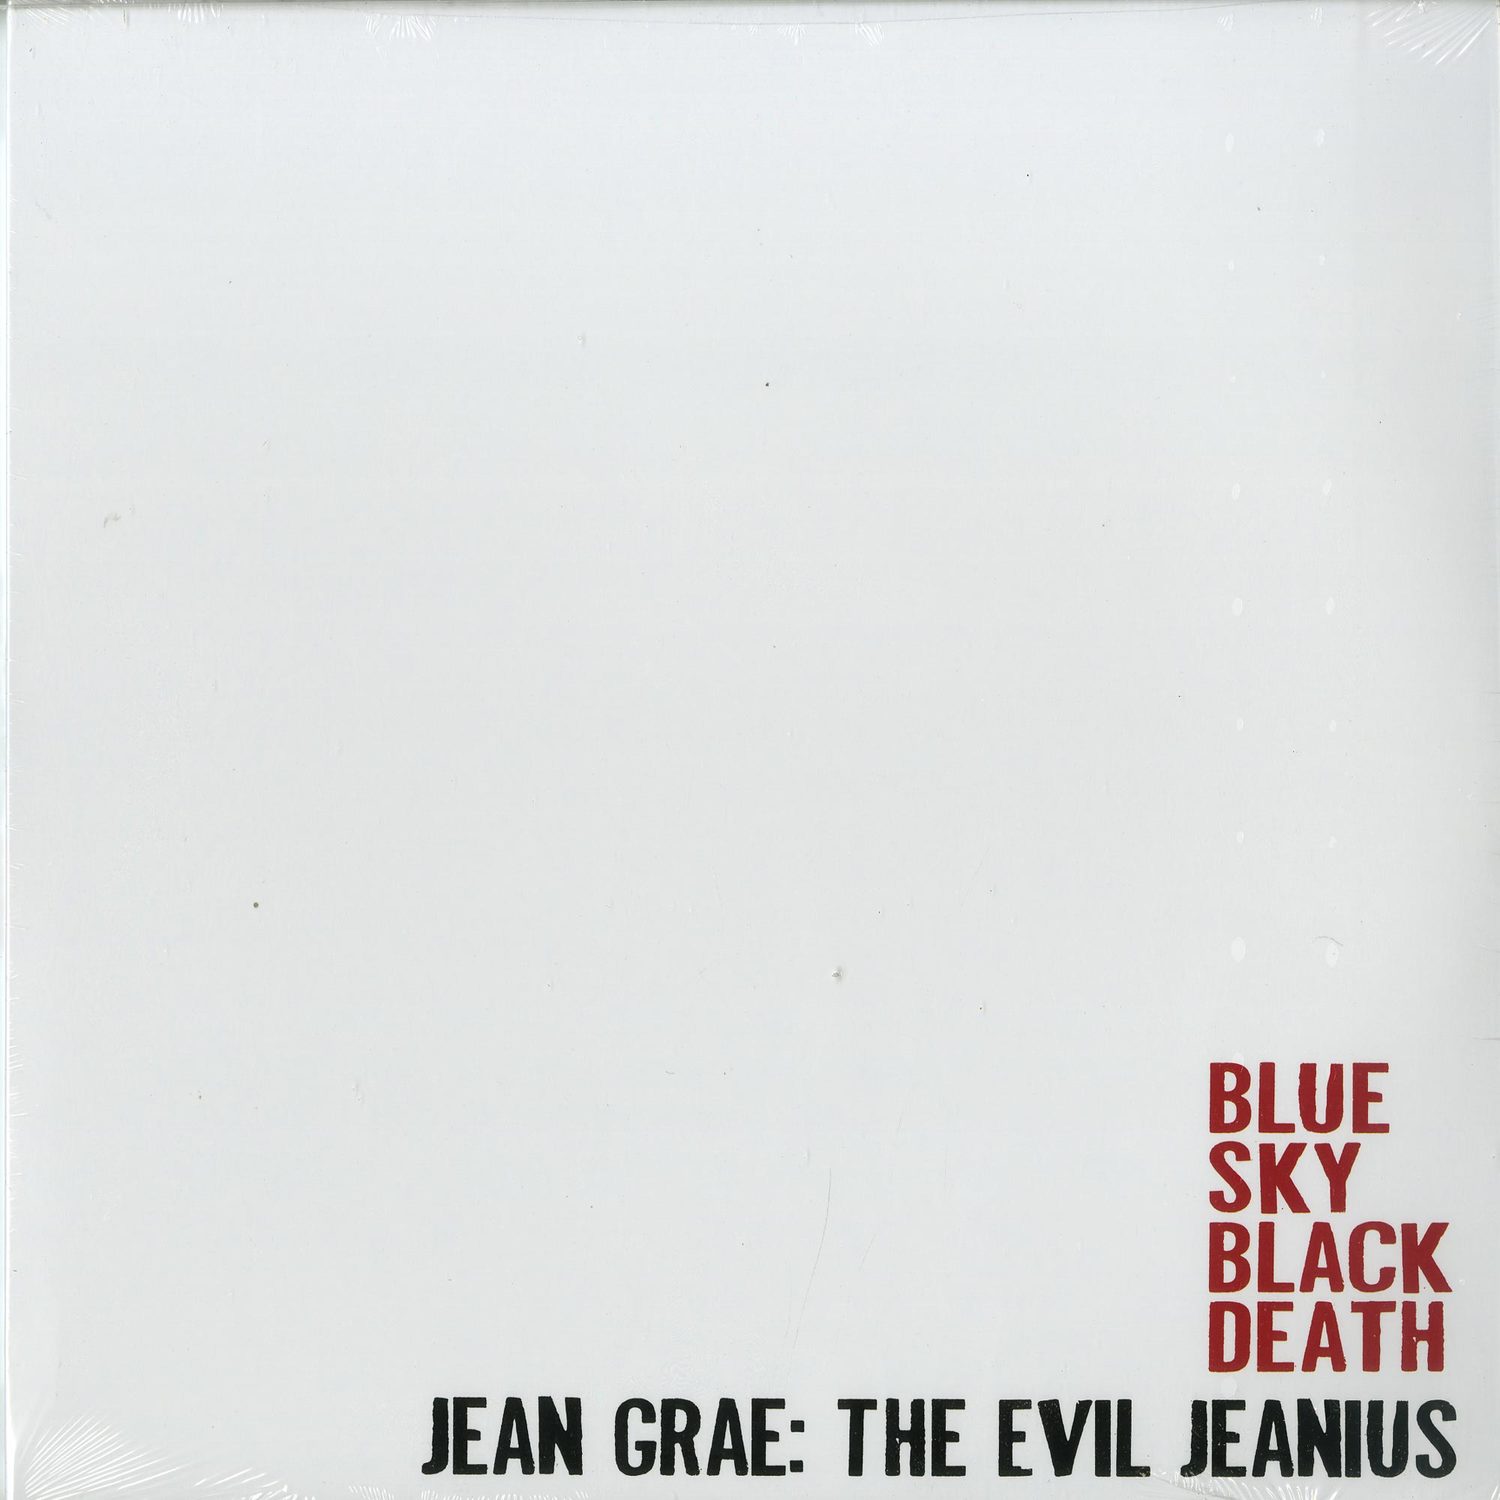 Blue Sky Black Death & Jean Grae - THE EVIL JEANIUS 